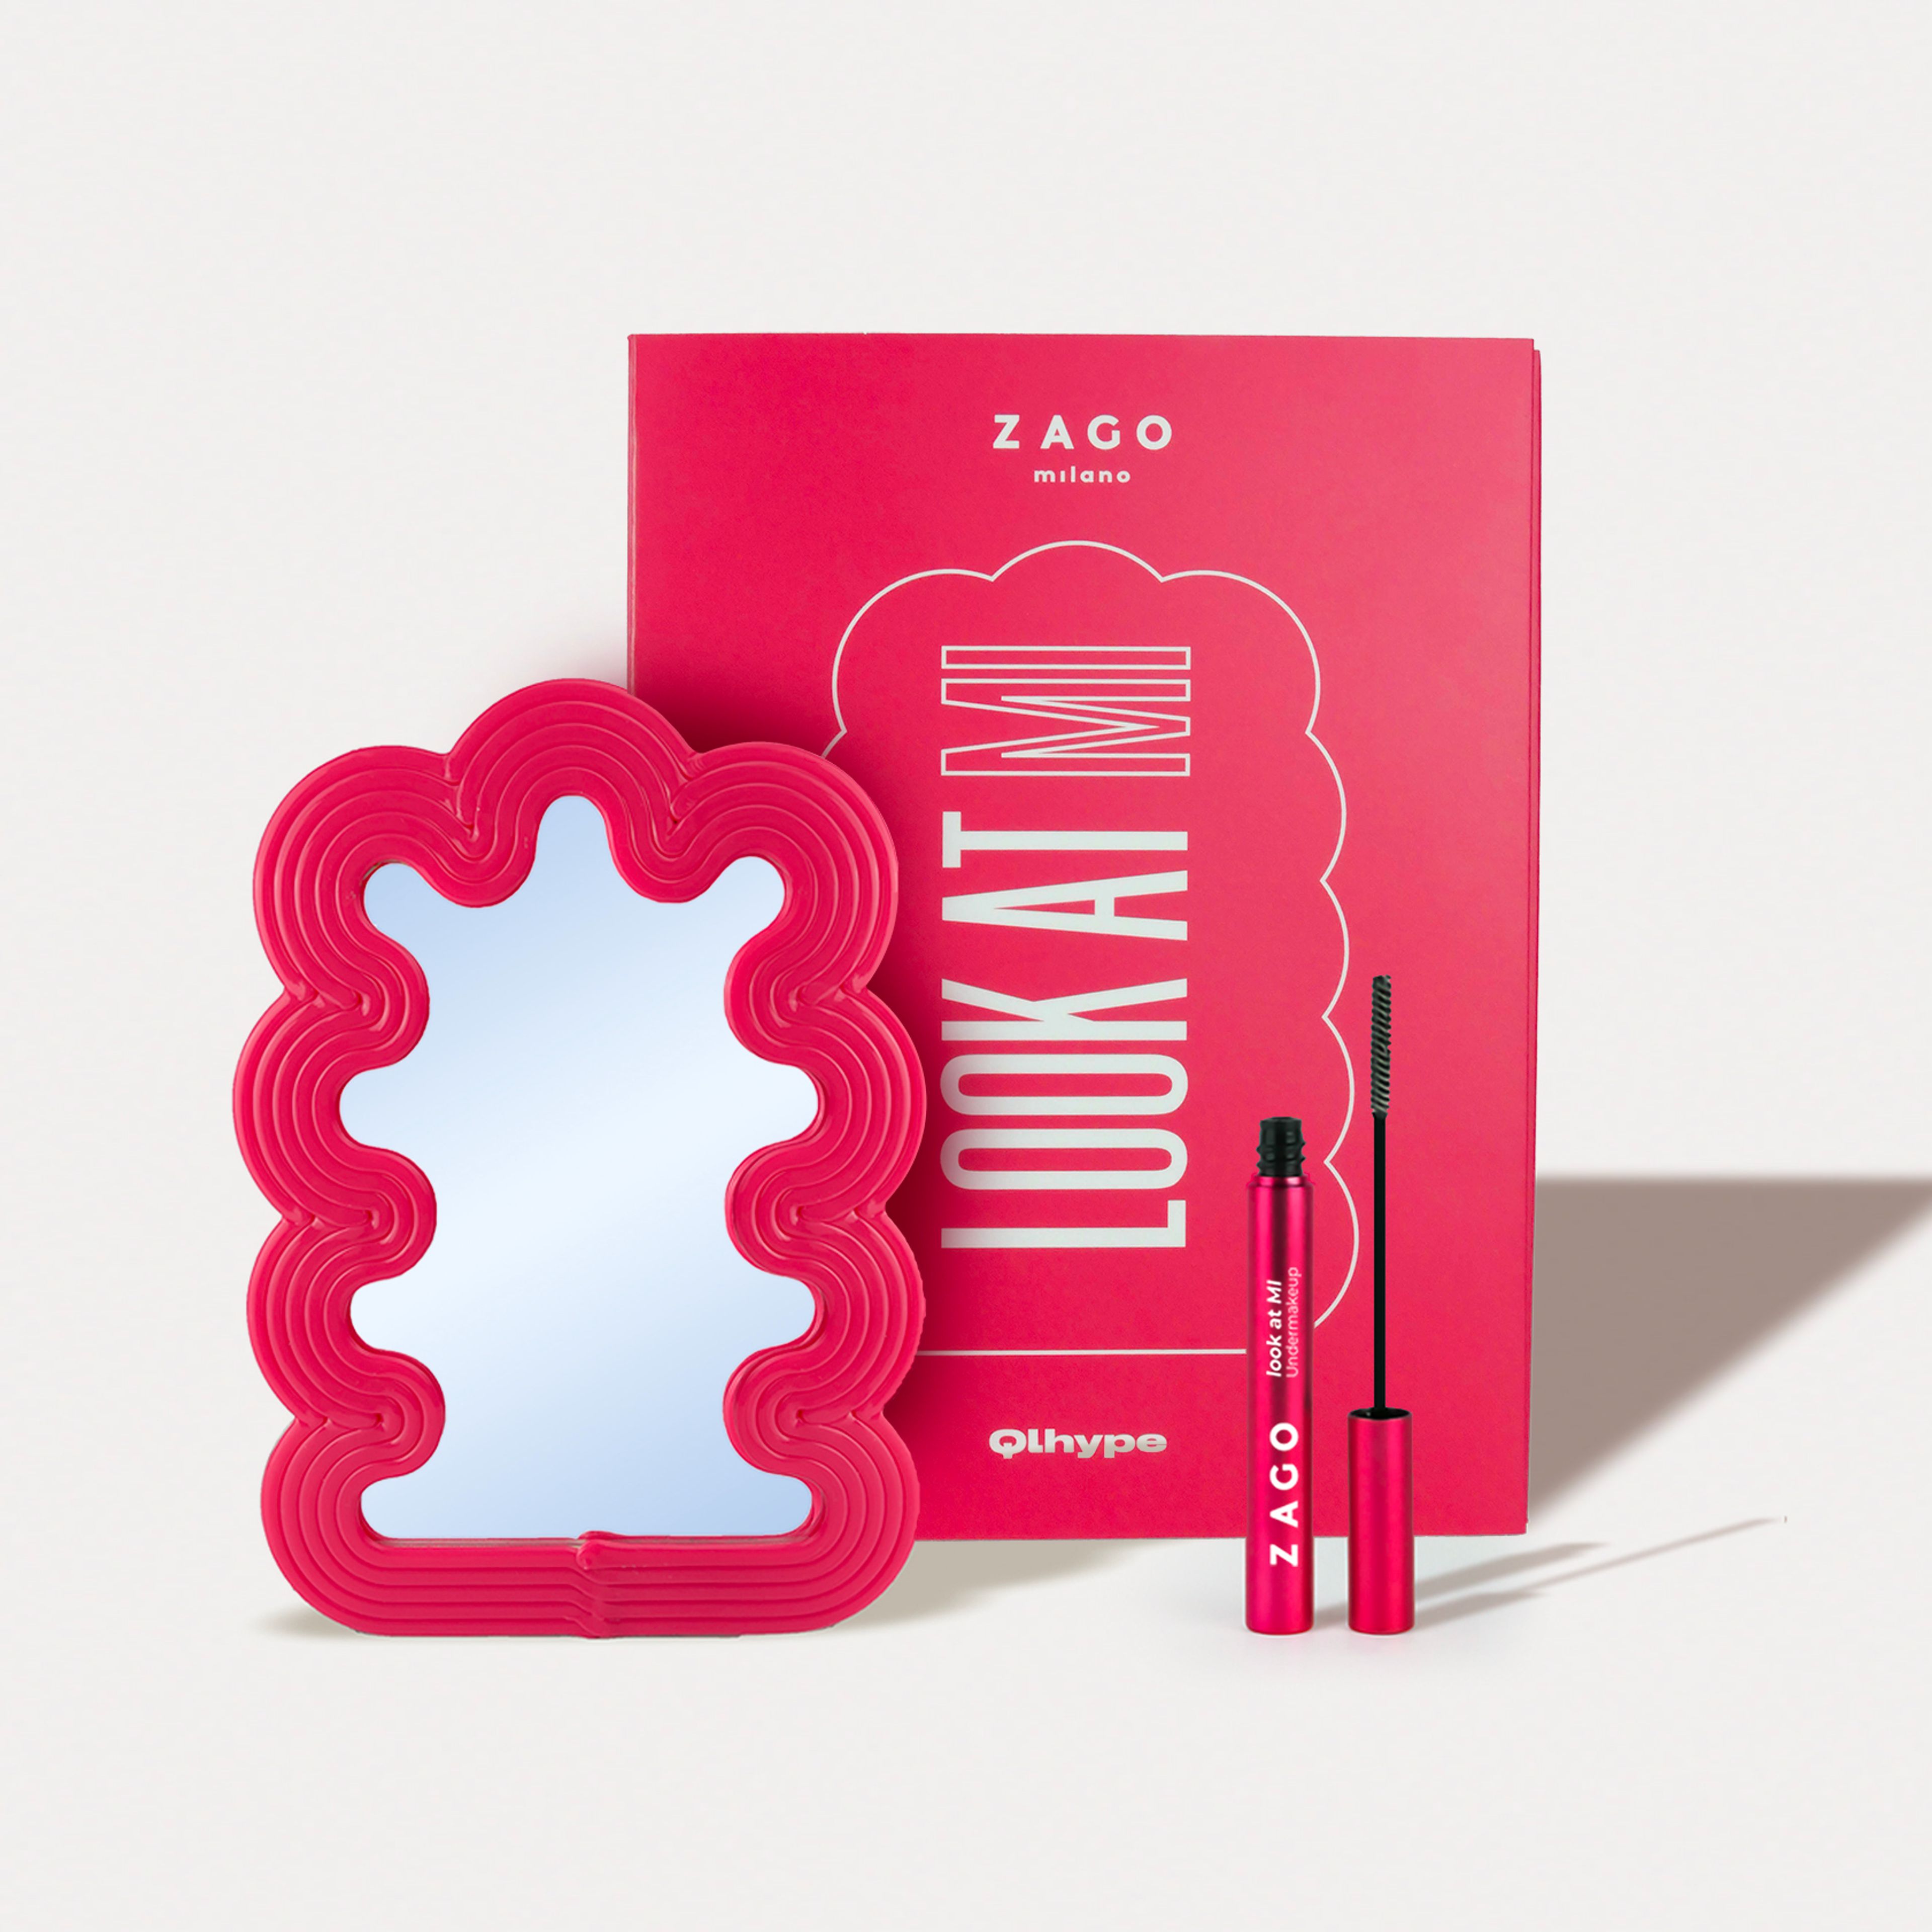 Zago Milano Look At Mi Box Limited Edition 1